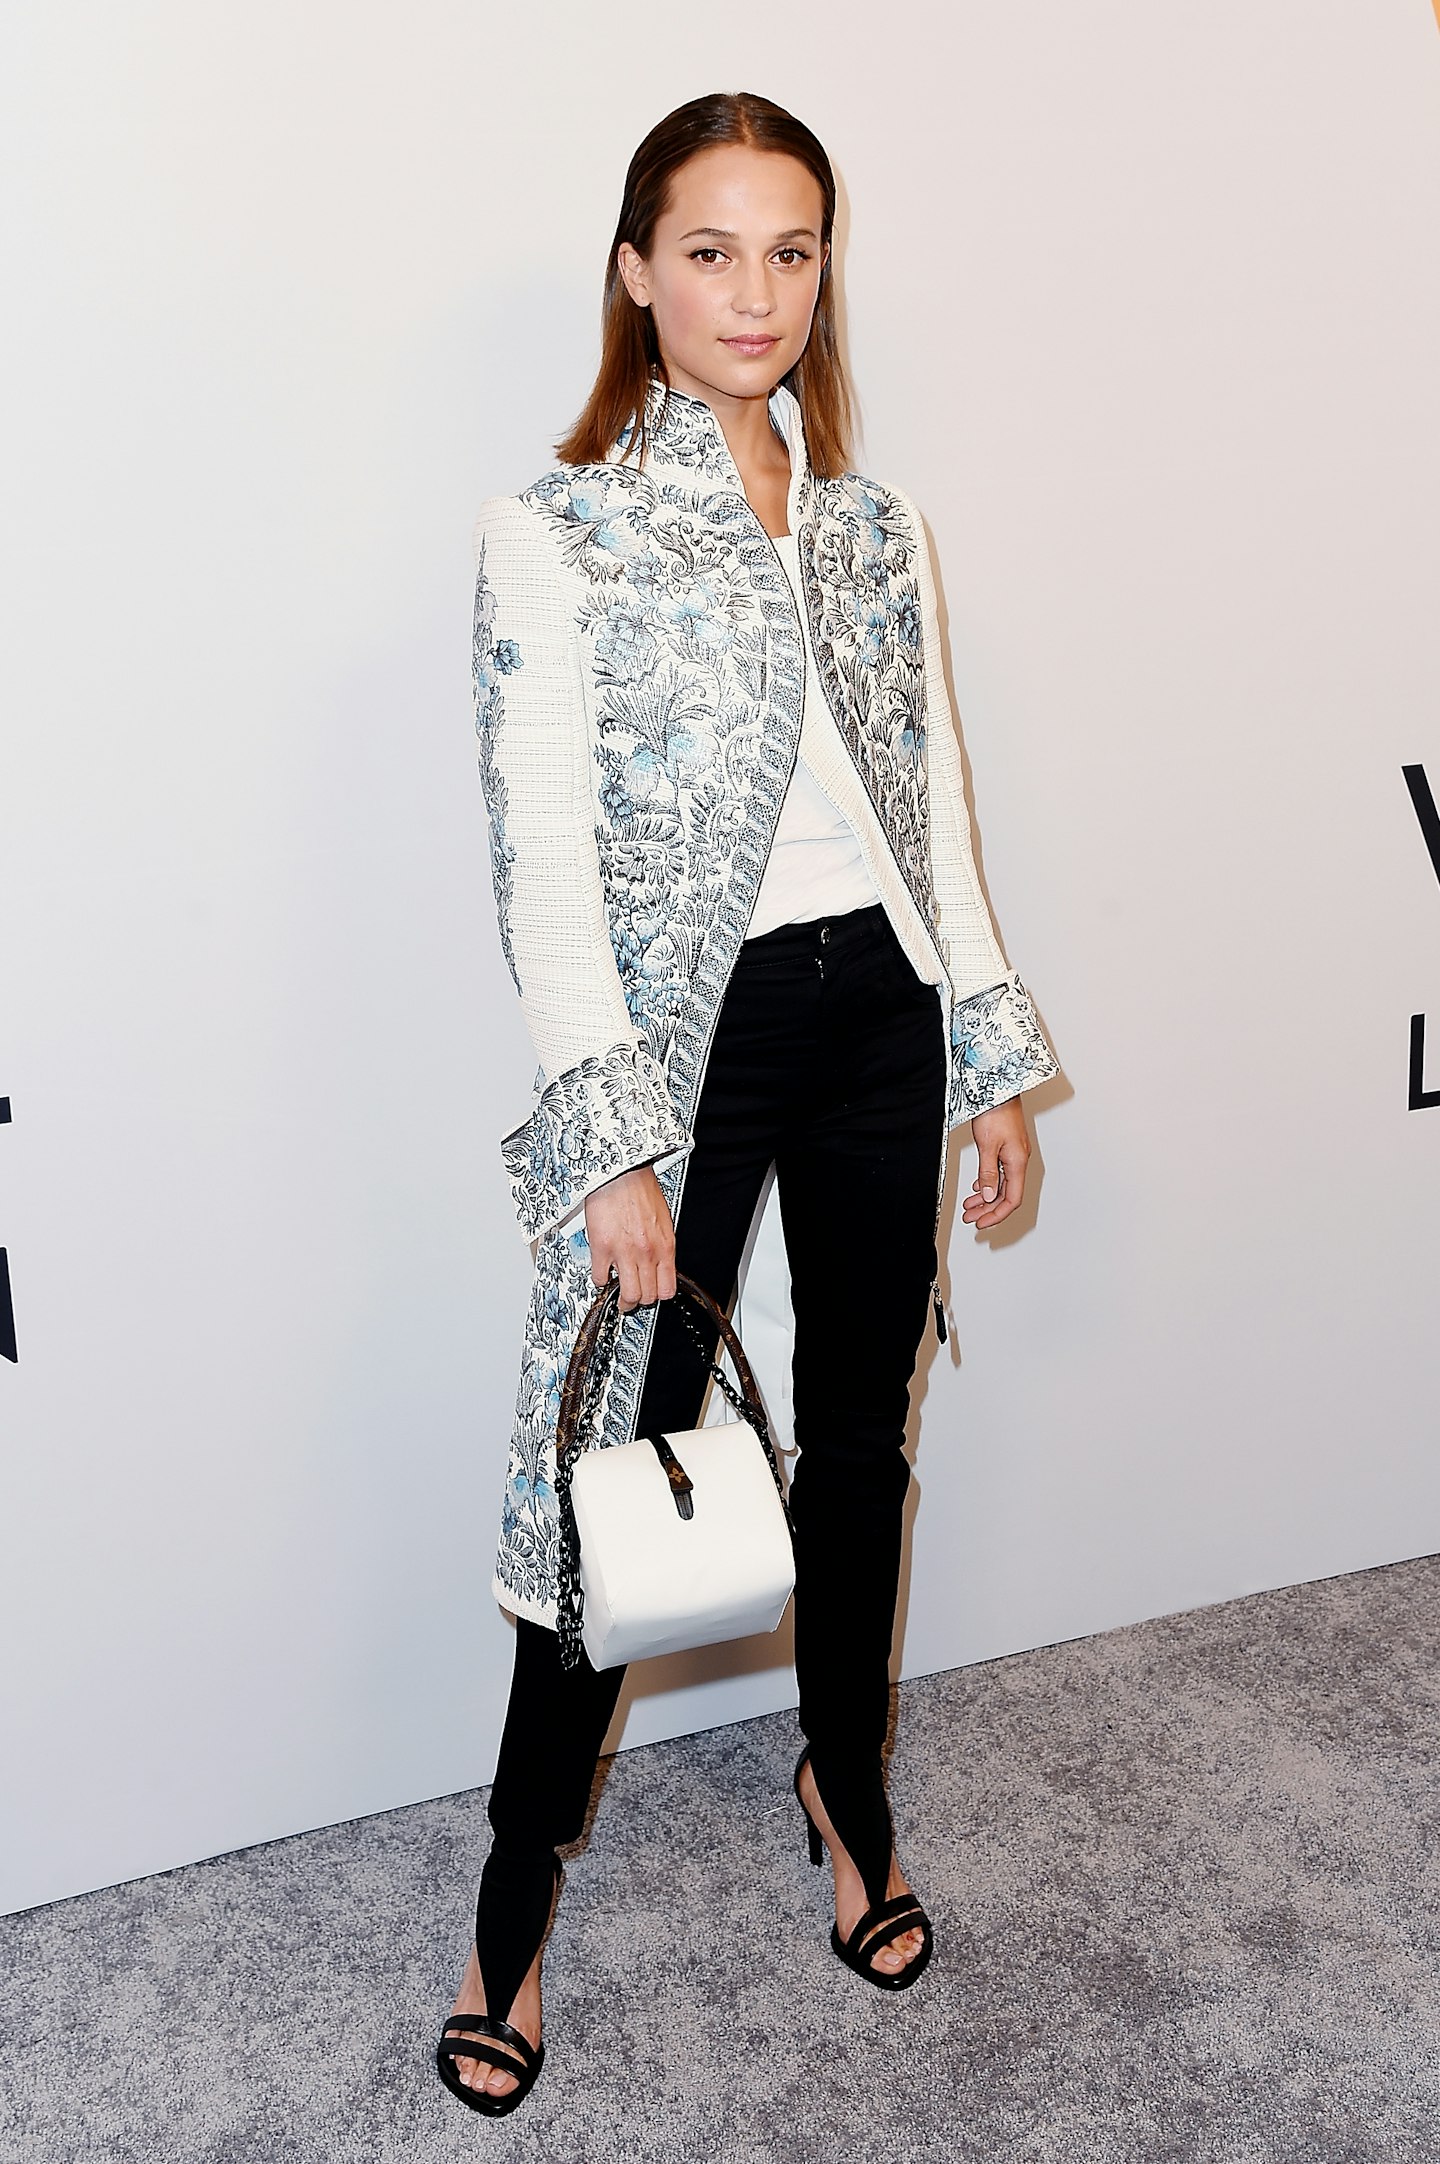 Alicia Vikander, Michael Fassbender Shine in Silver at Paris Fashion Week